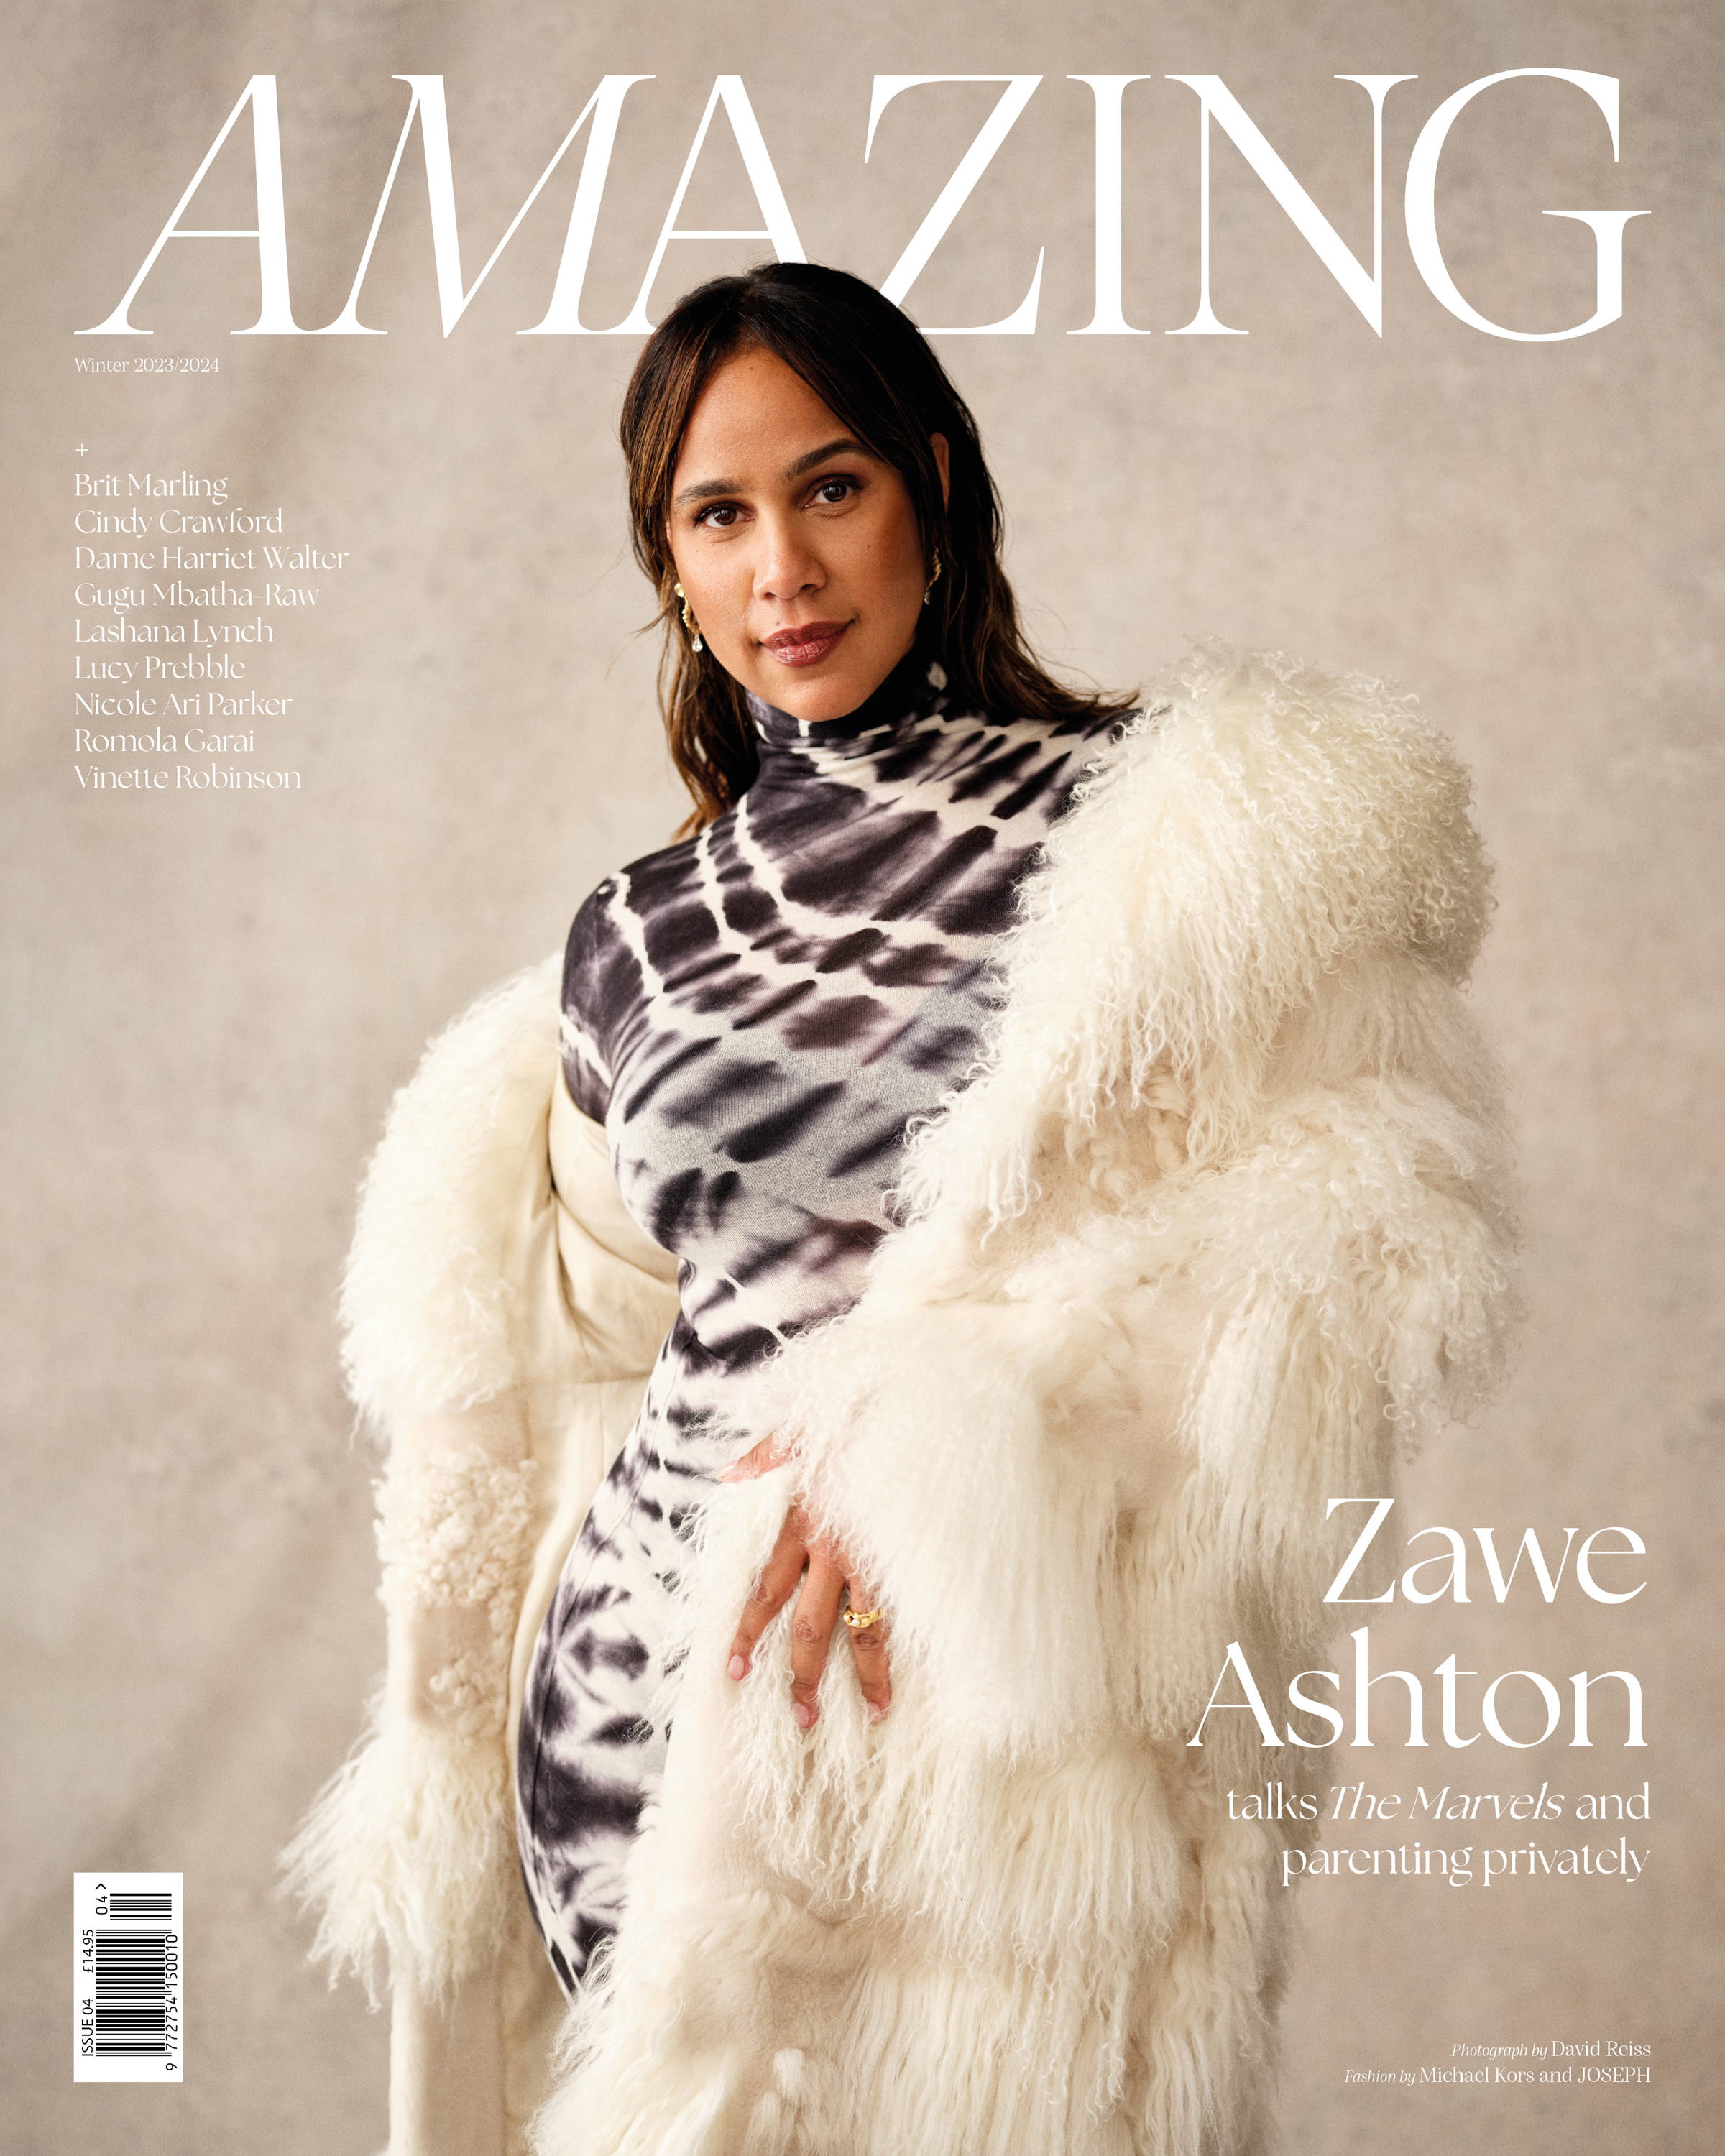 Zawe Ashton covers AMAZING magazine issue 4 by David Reiss